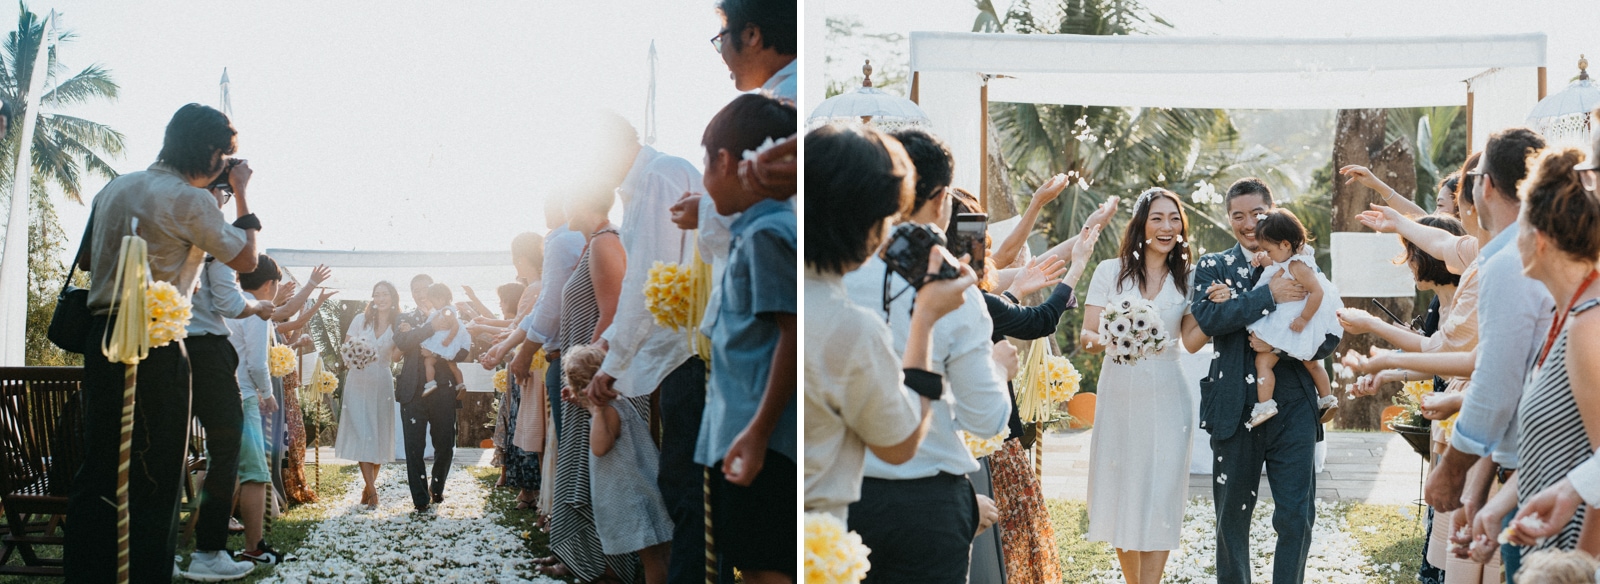 the wedding flower shower photography in ubud